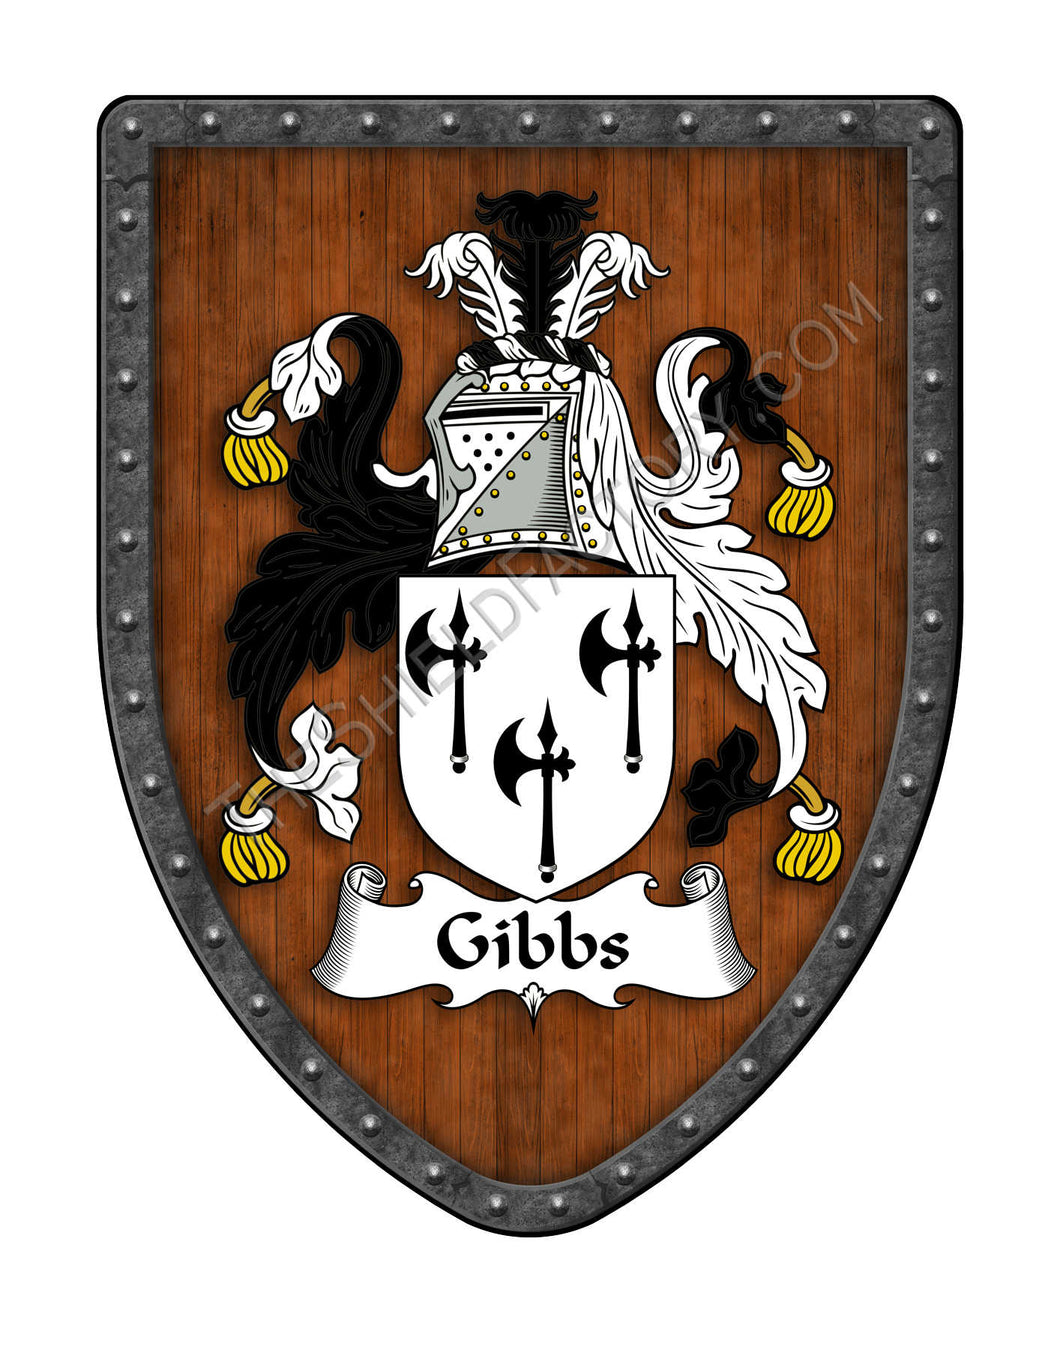 Gibbs Coat of Arms Shield